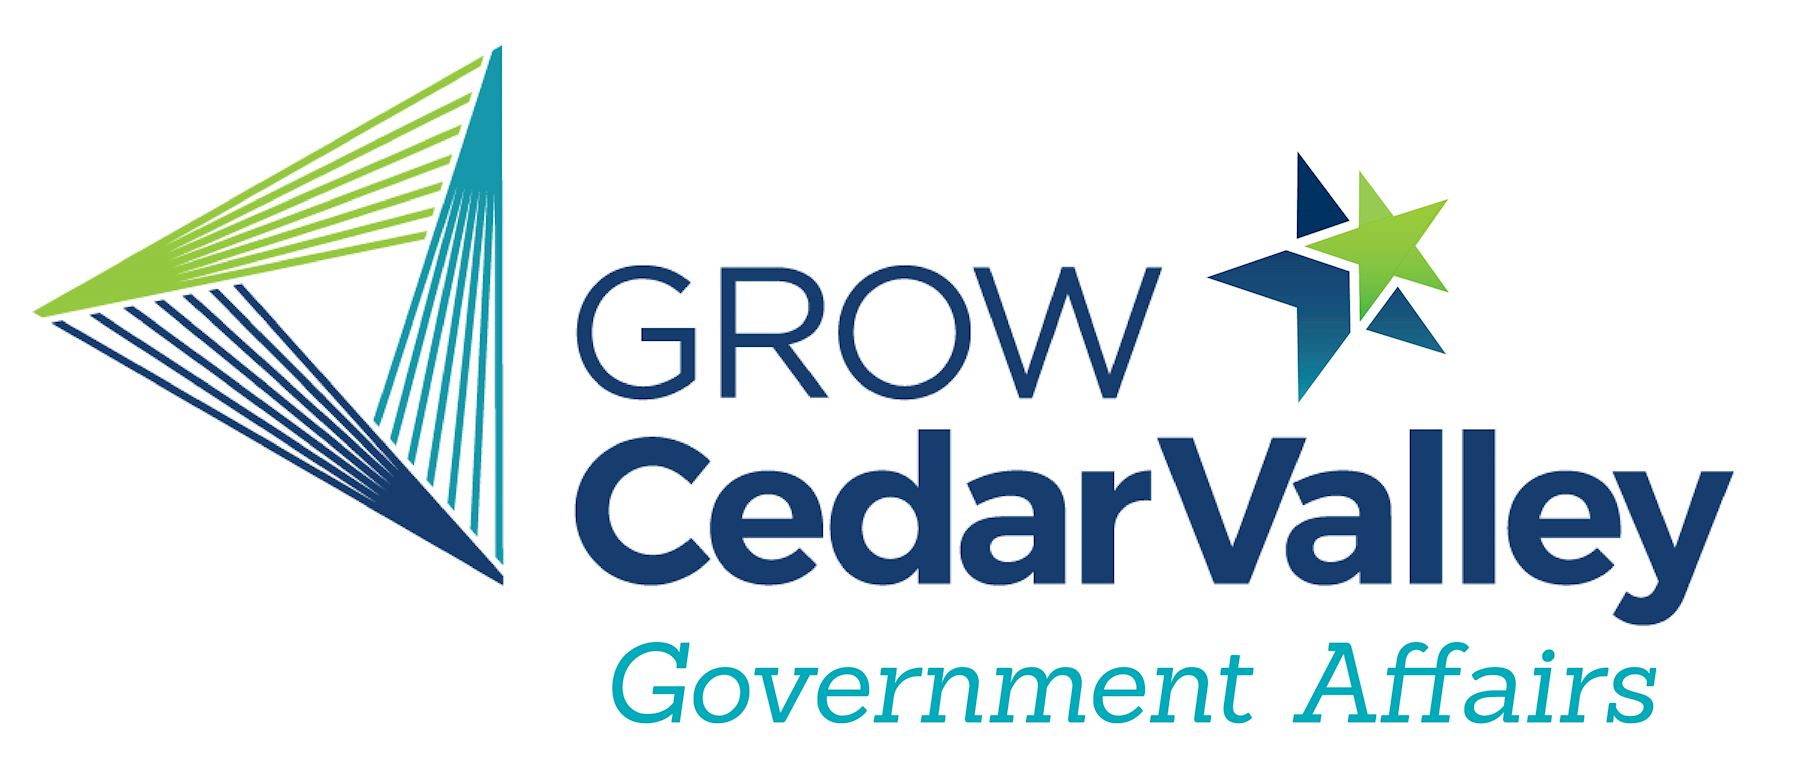 Grow Cedar Valley 2020 Legislative Session - Setting the Scene